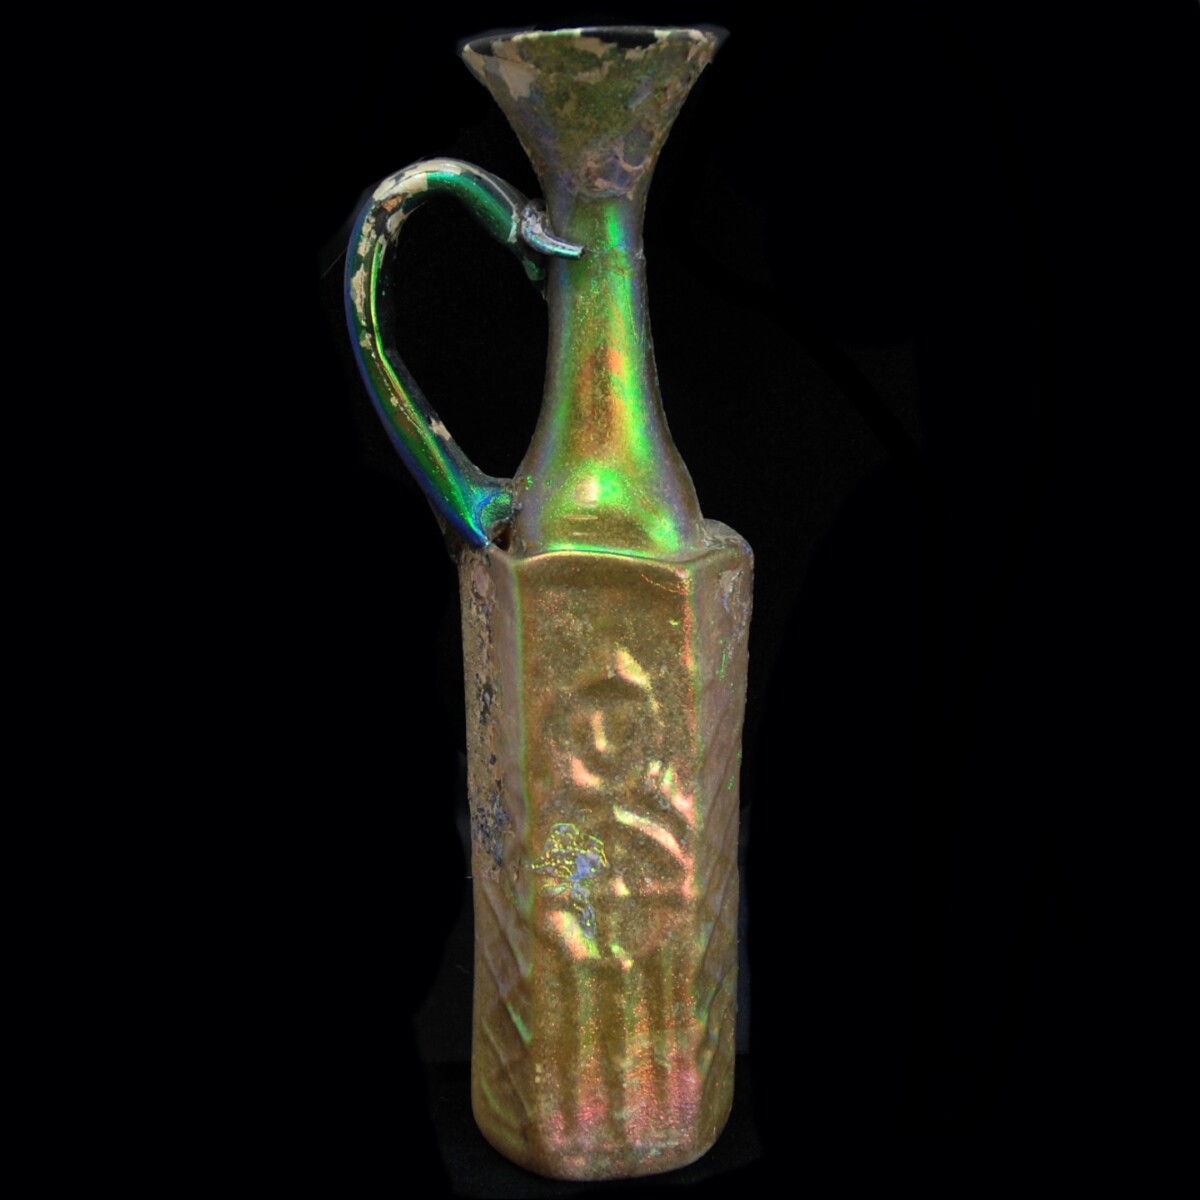 Important early Christian hexagonal glass bottle